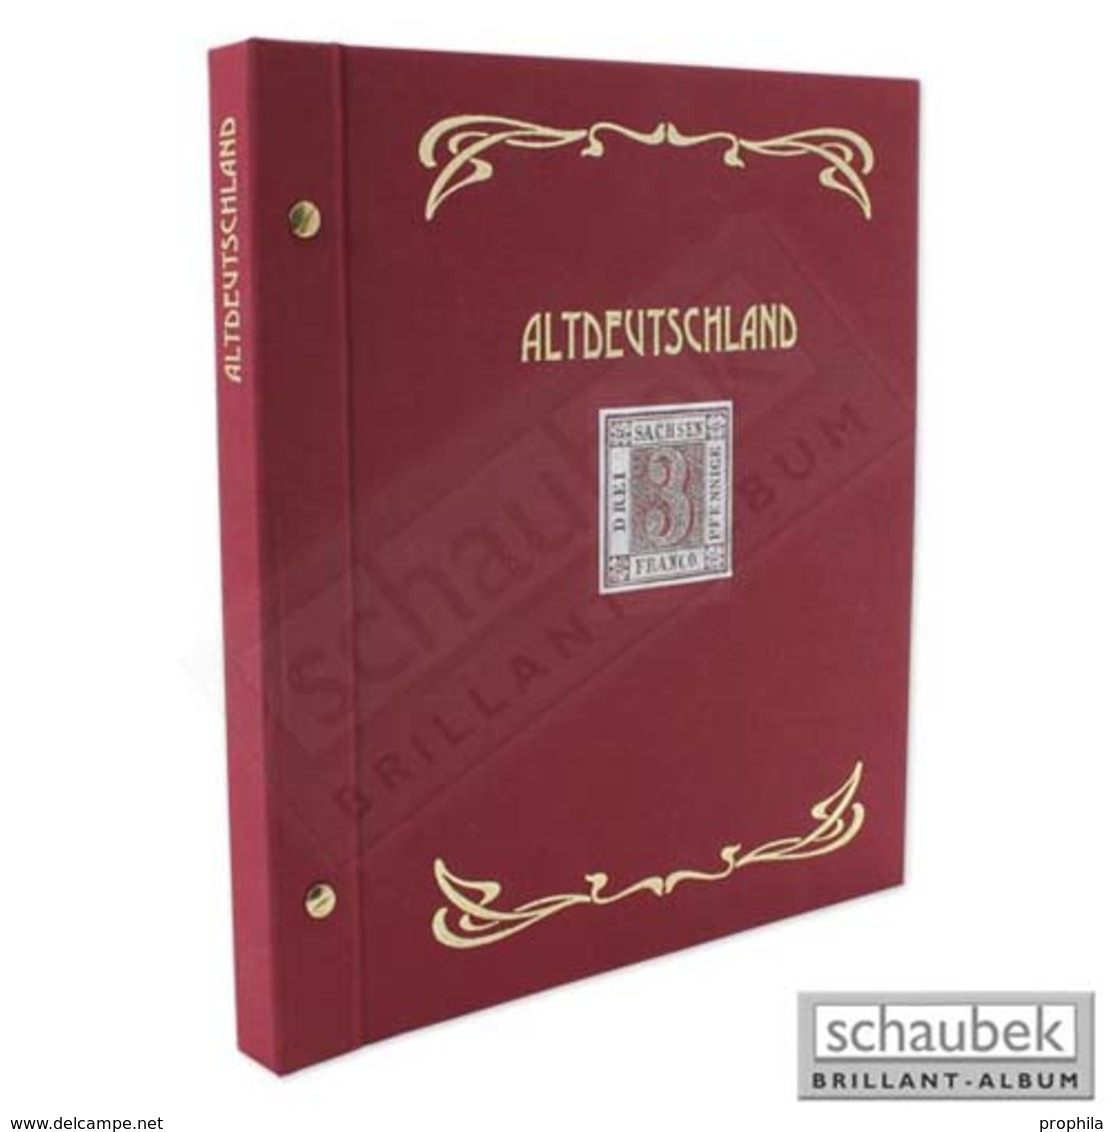 Schaubek Ds0021 Schraubbinder Leinen Schmal Rot, Reprint-Ausführung Altdeutschland - Groot Formaat, Zwarte Pagina